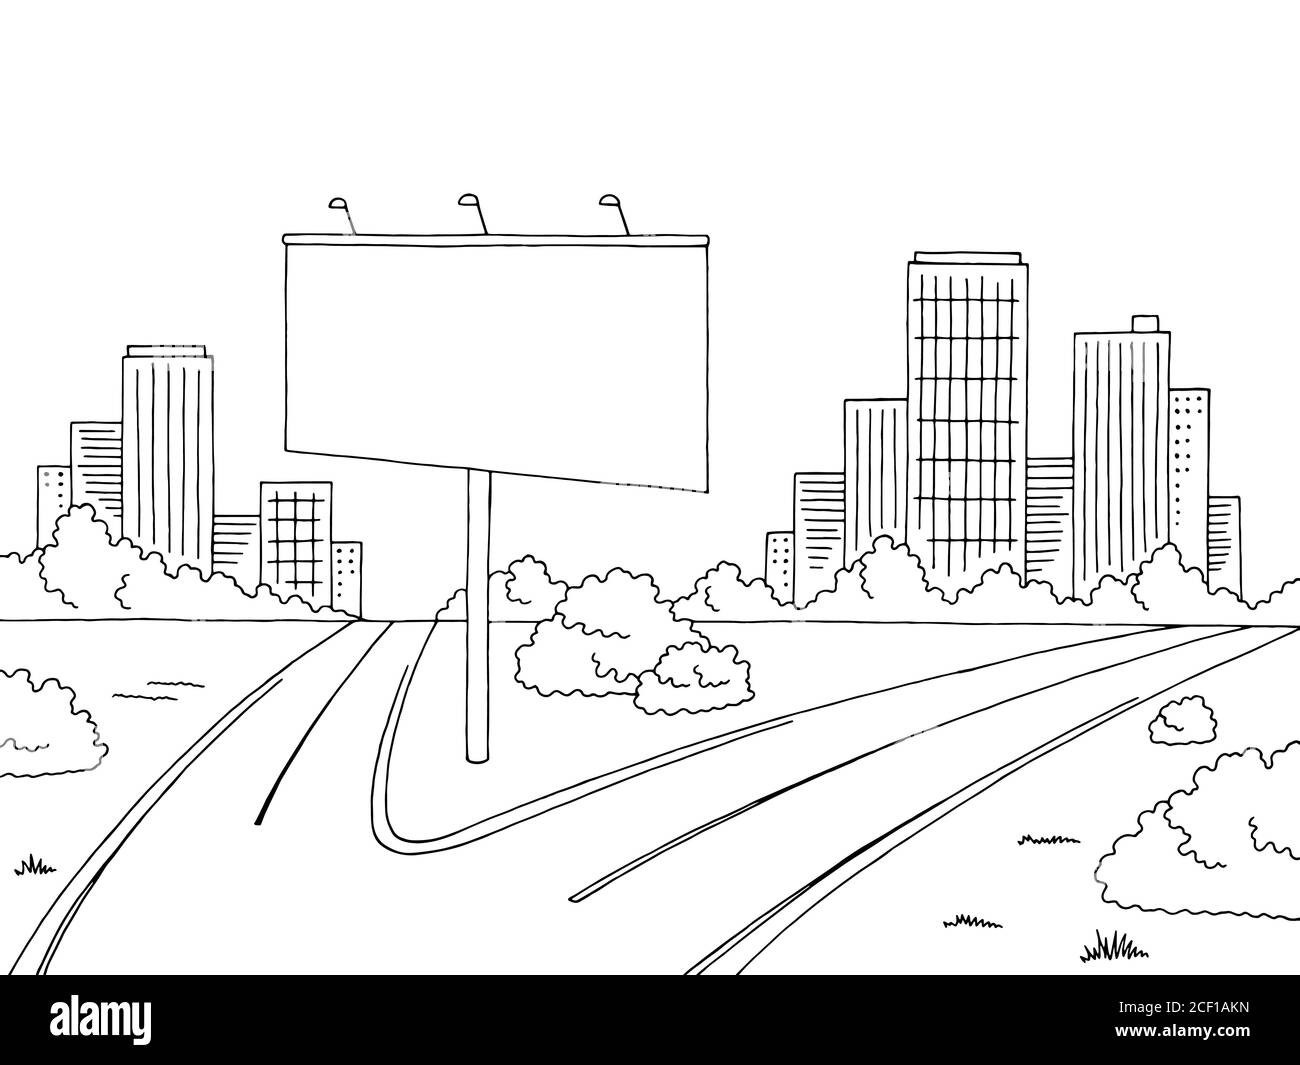 Straße Stadt Grafik schwarz weiß Landschaft Plakatwand Skizze Illustration Vektor Stock Vektor